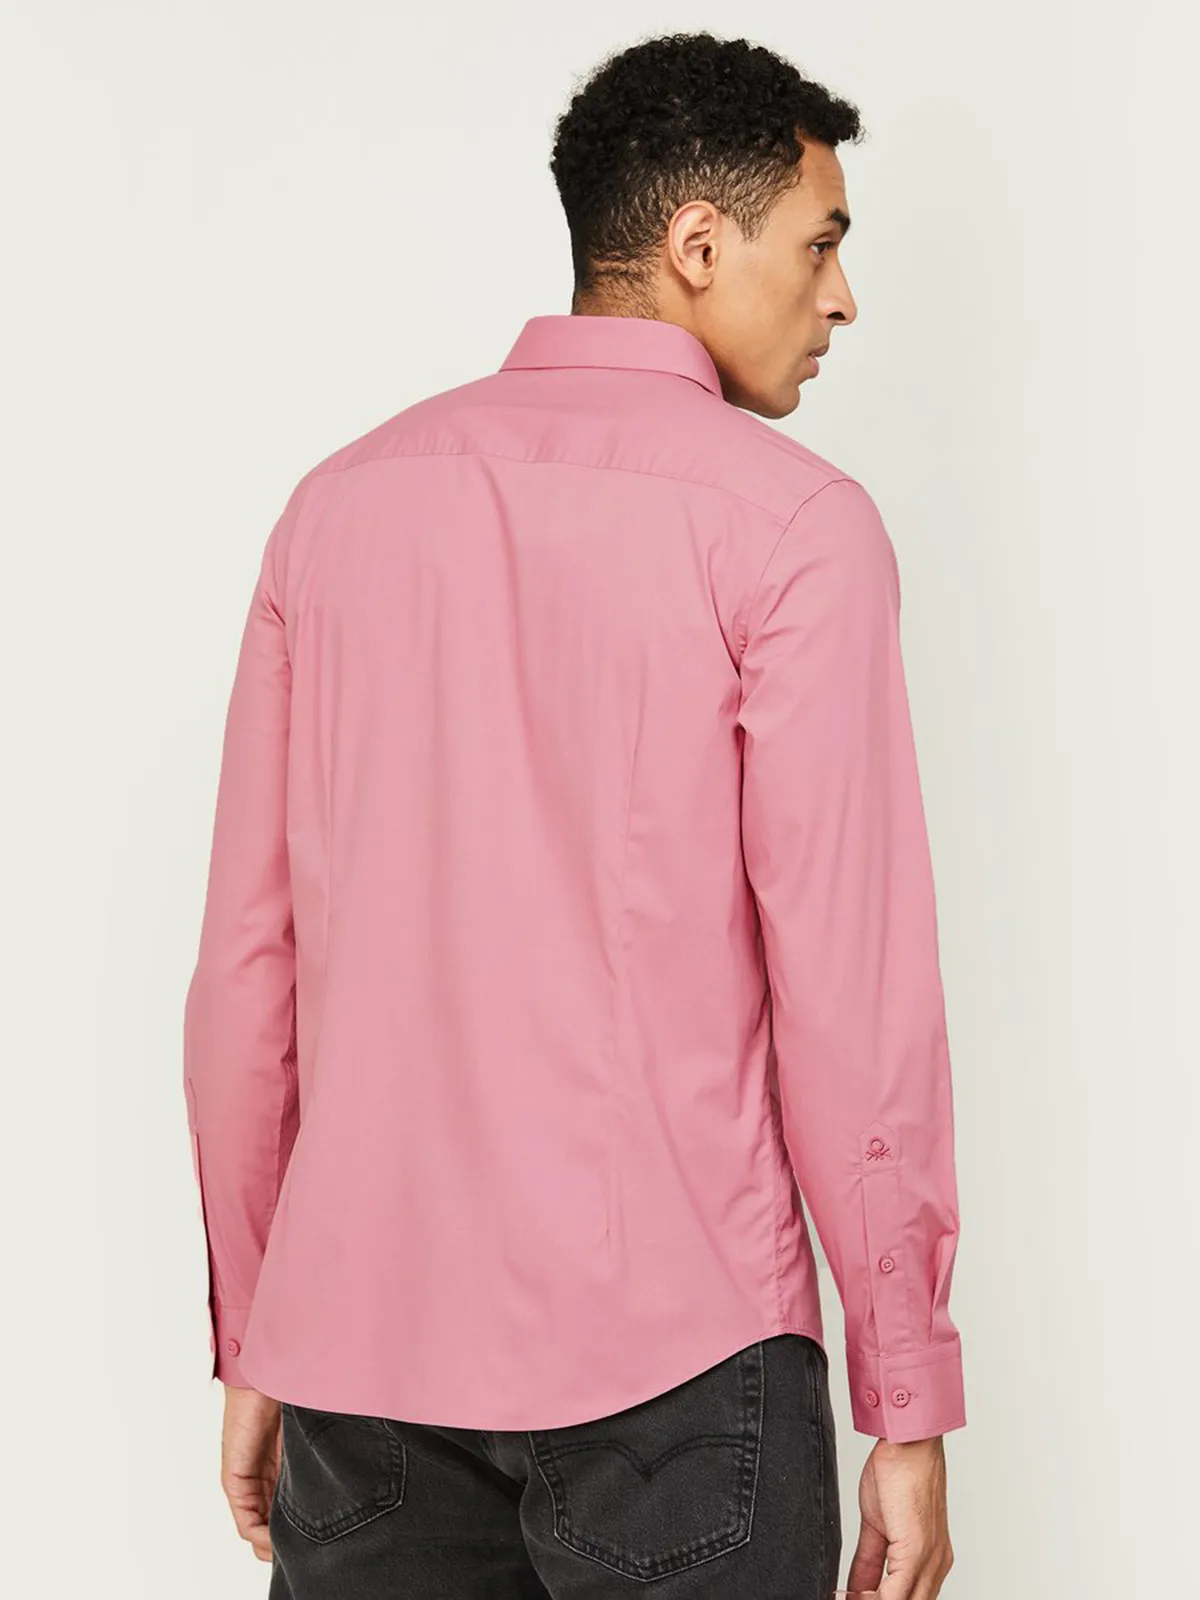 UCB pink plain cotton shirt